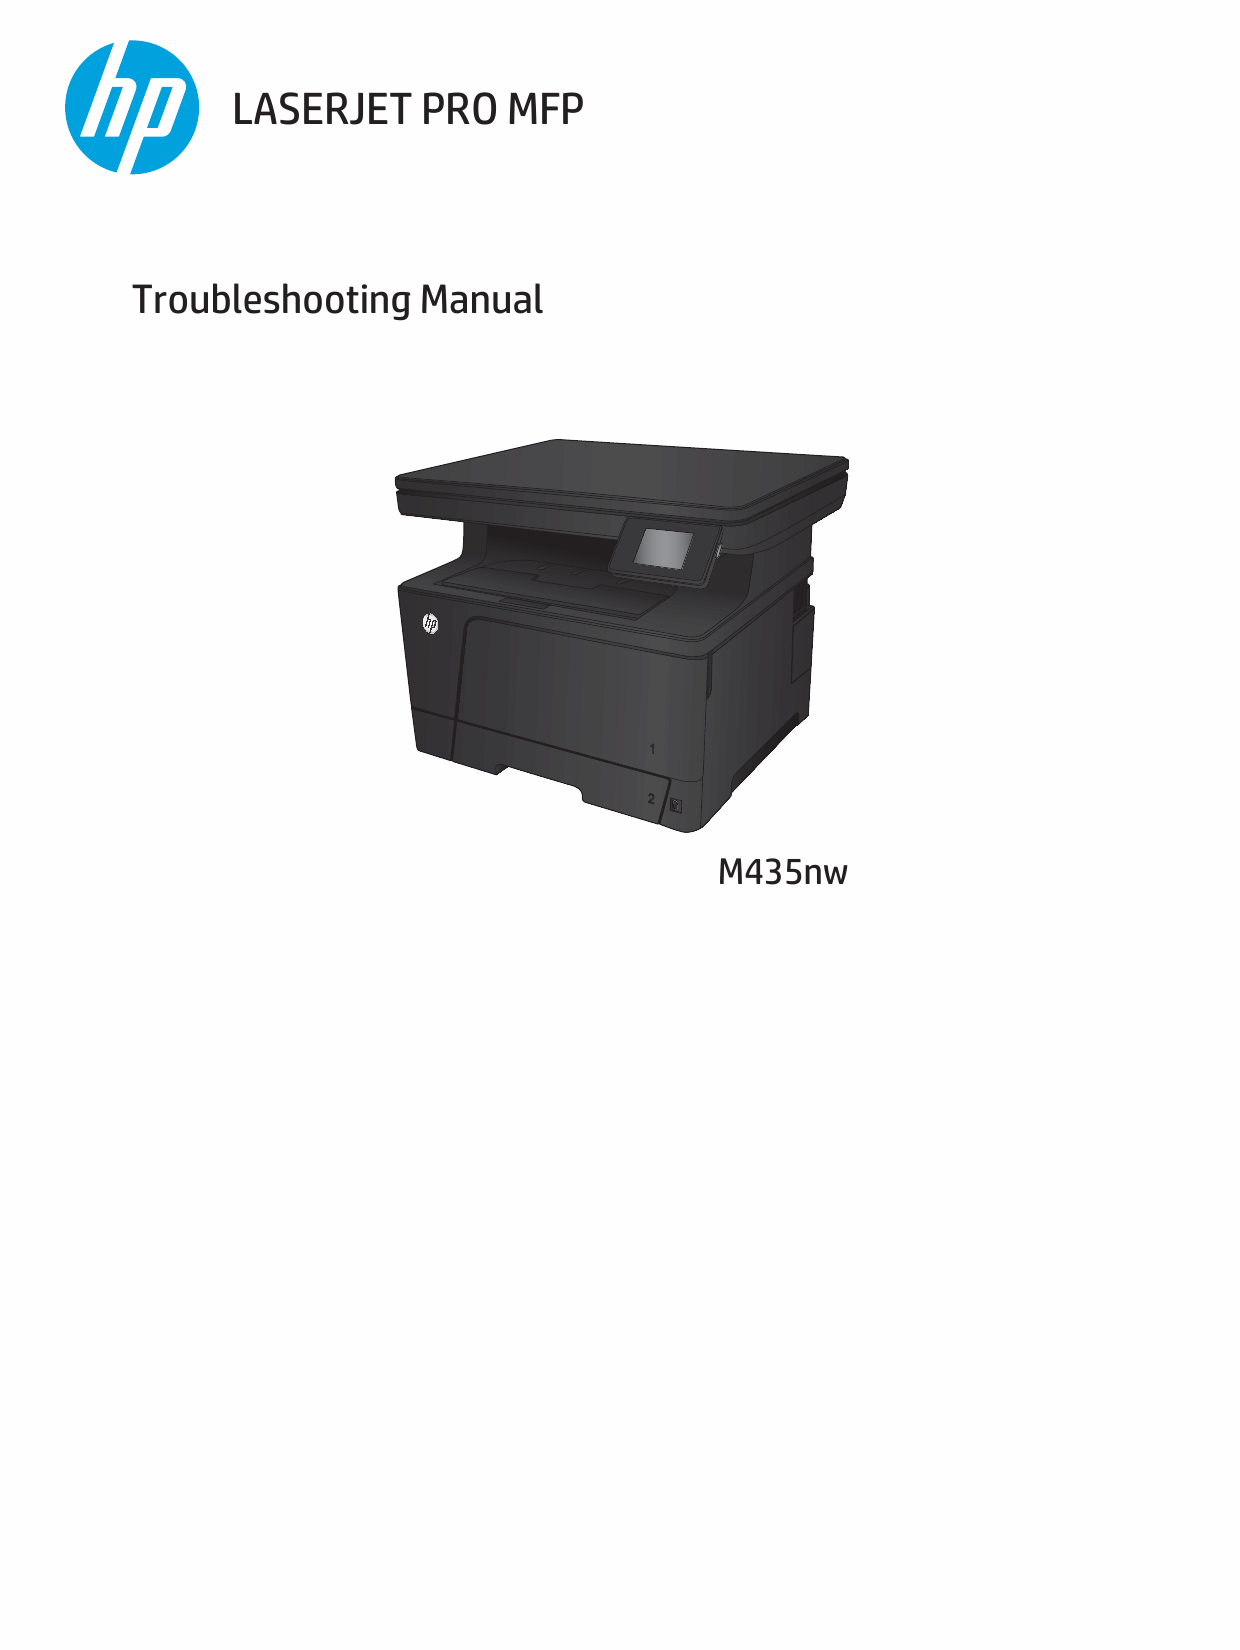 HP LaserJet Pro-MFP M435nw Troubleshooting Manual PDF download-1